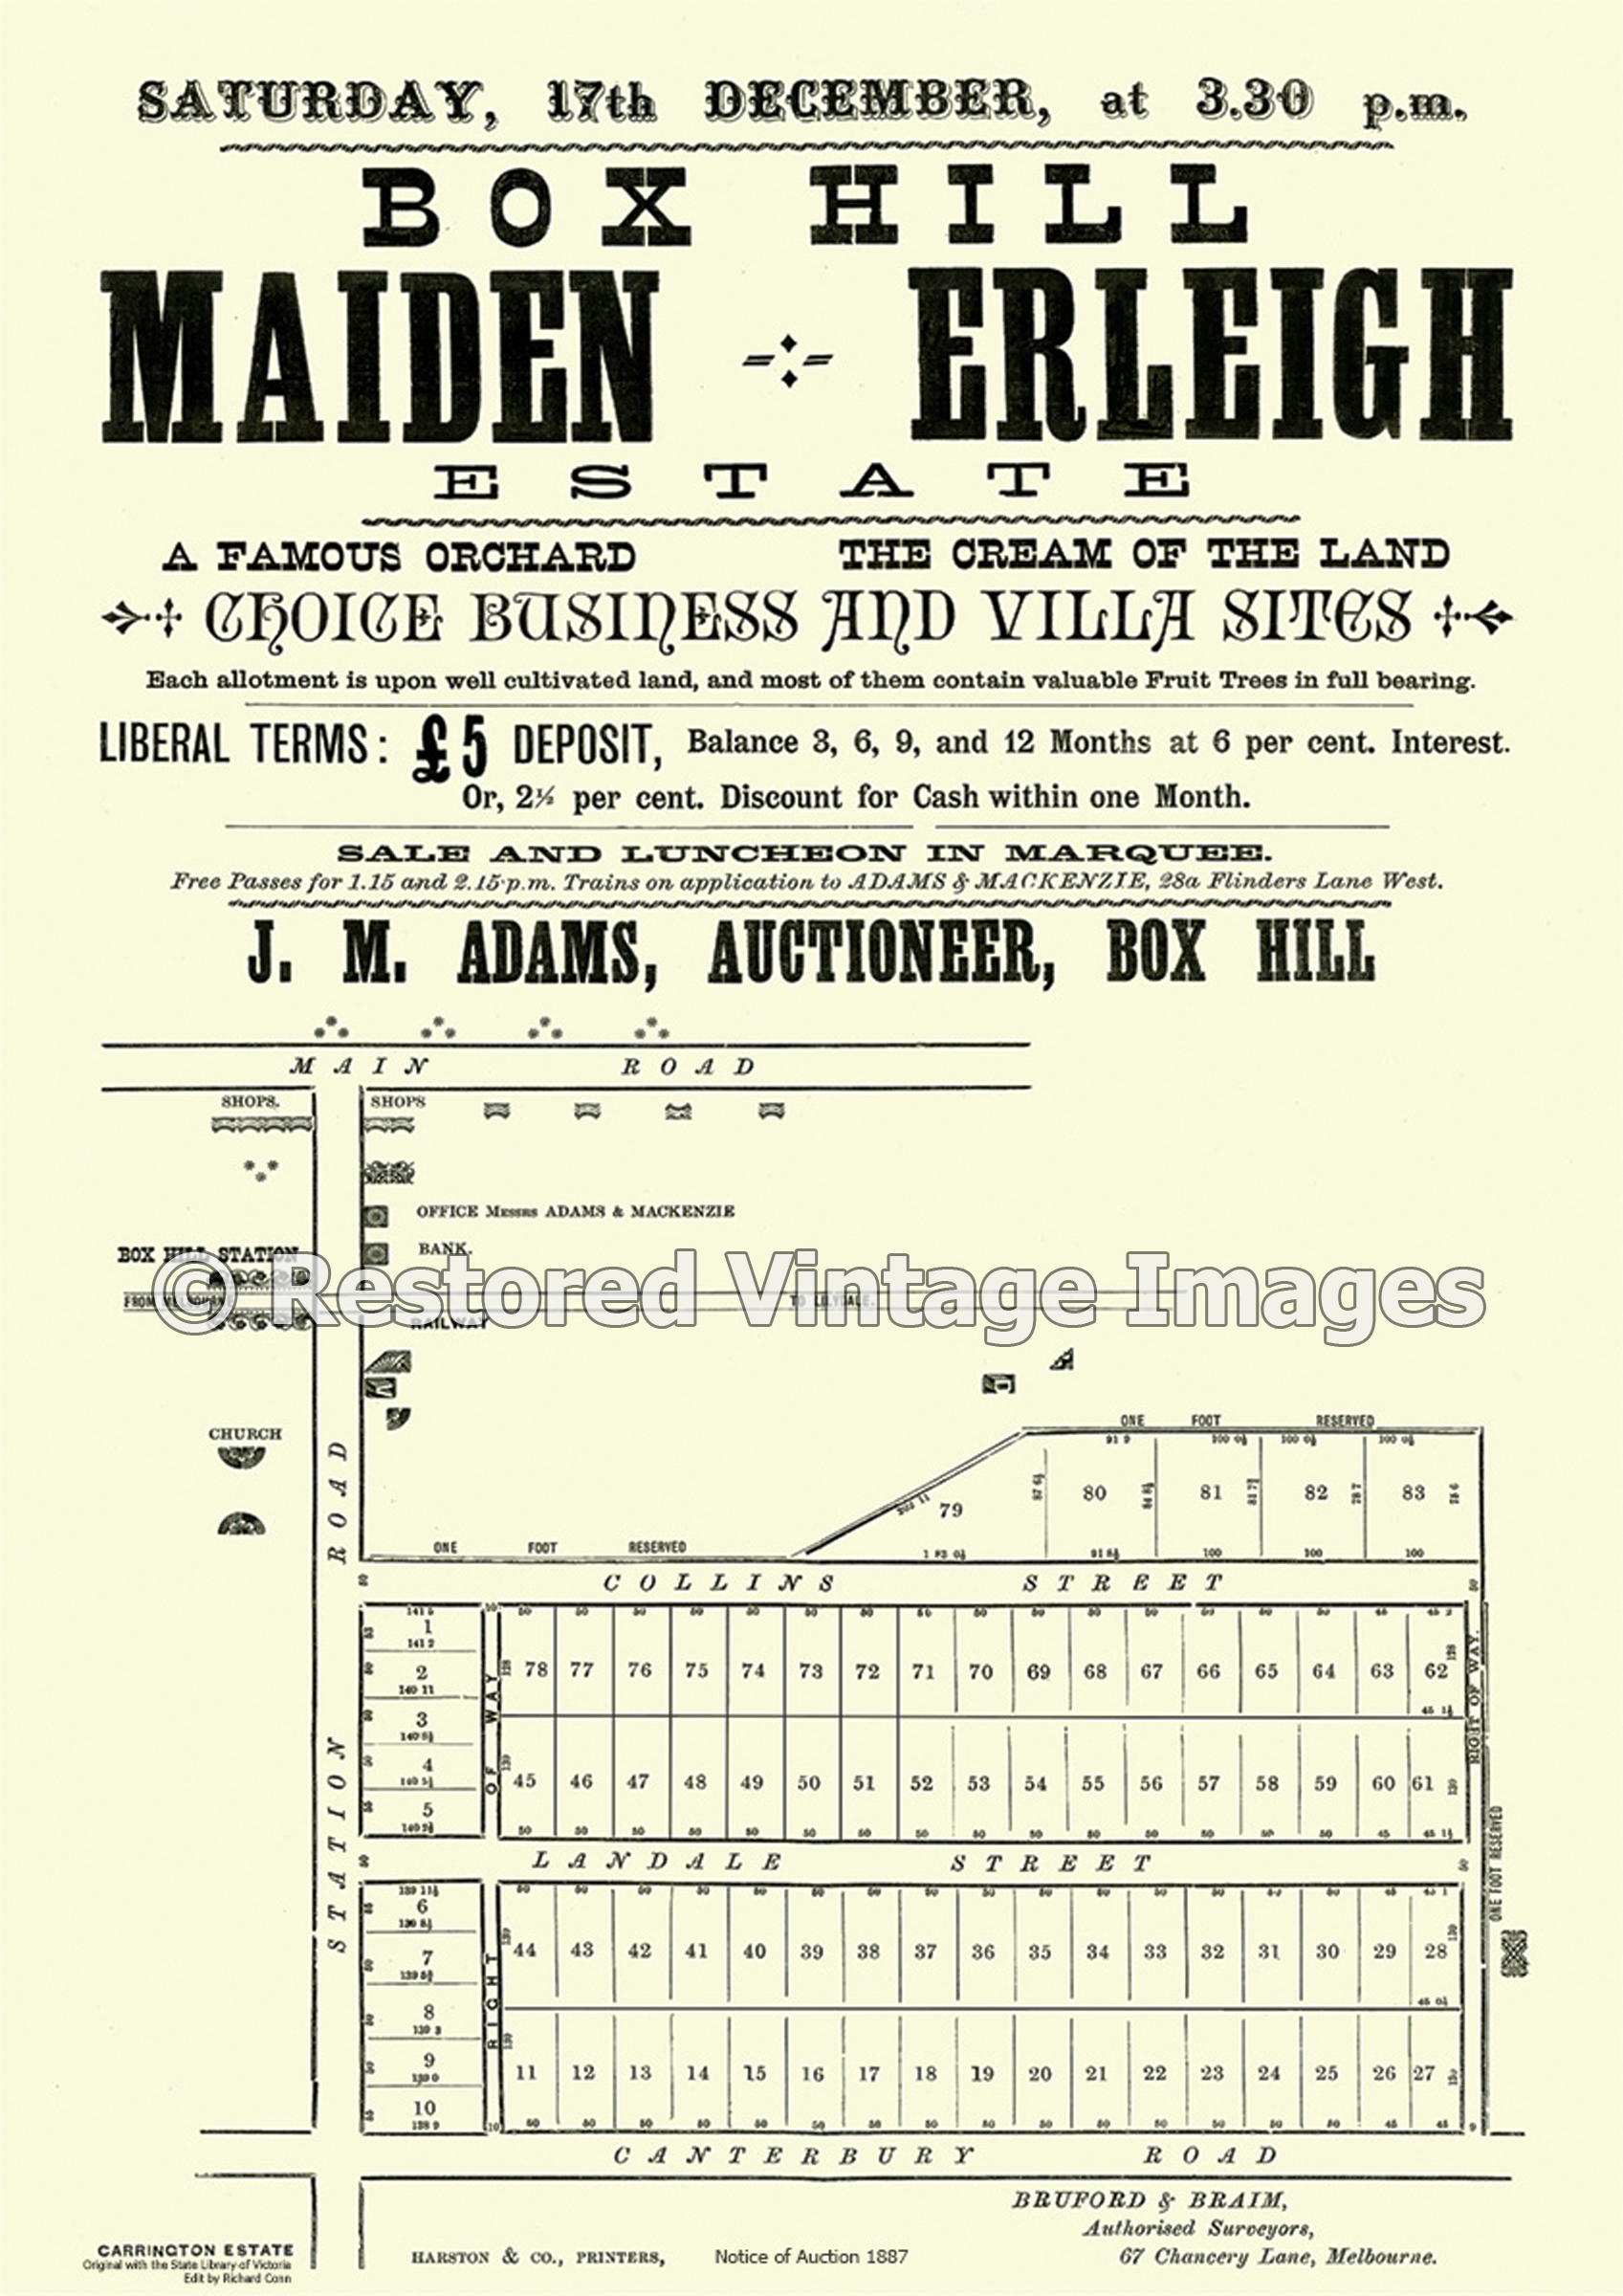 Maiden Erleigh Estate 17th December 1887 – Box Hill